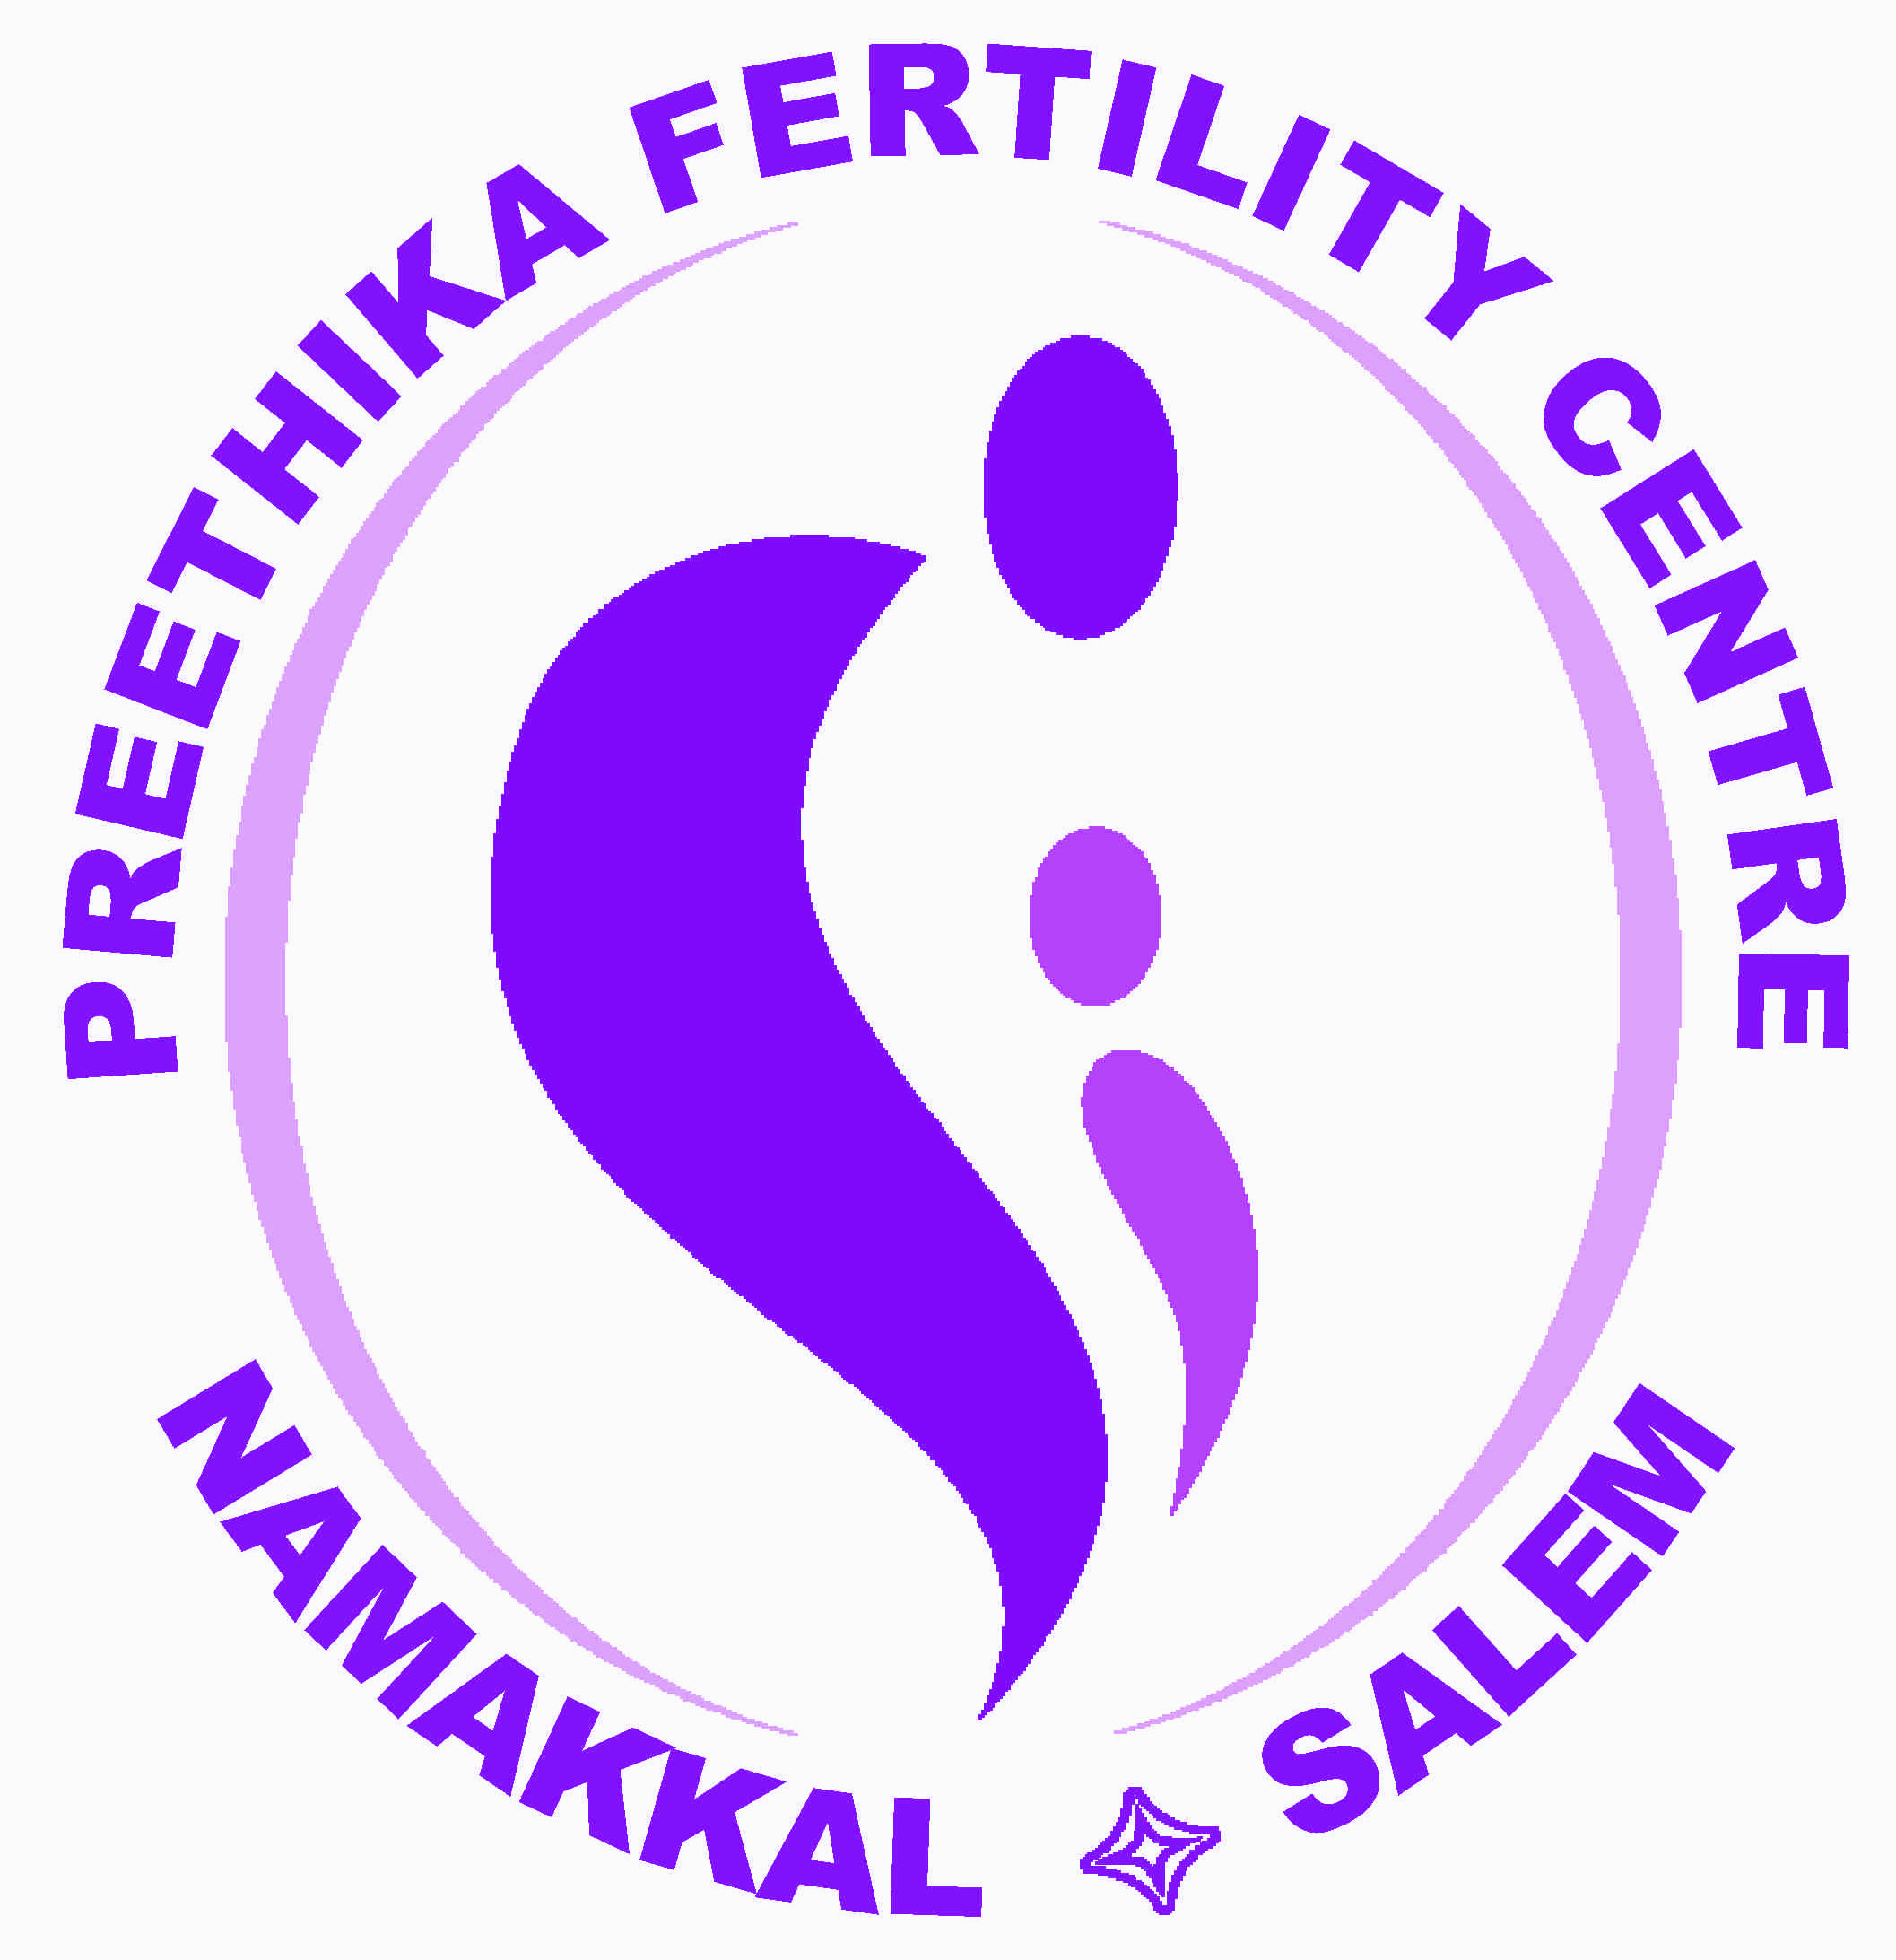 Preethika Fertility Center|Clinics|Medical Services